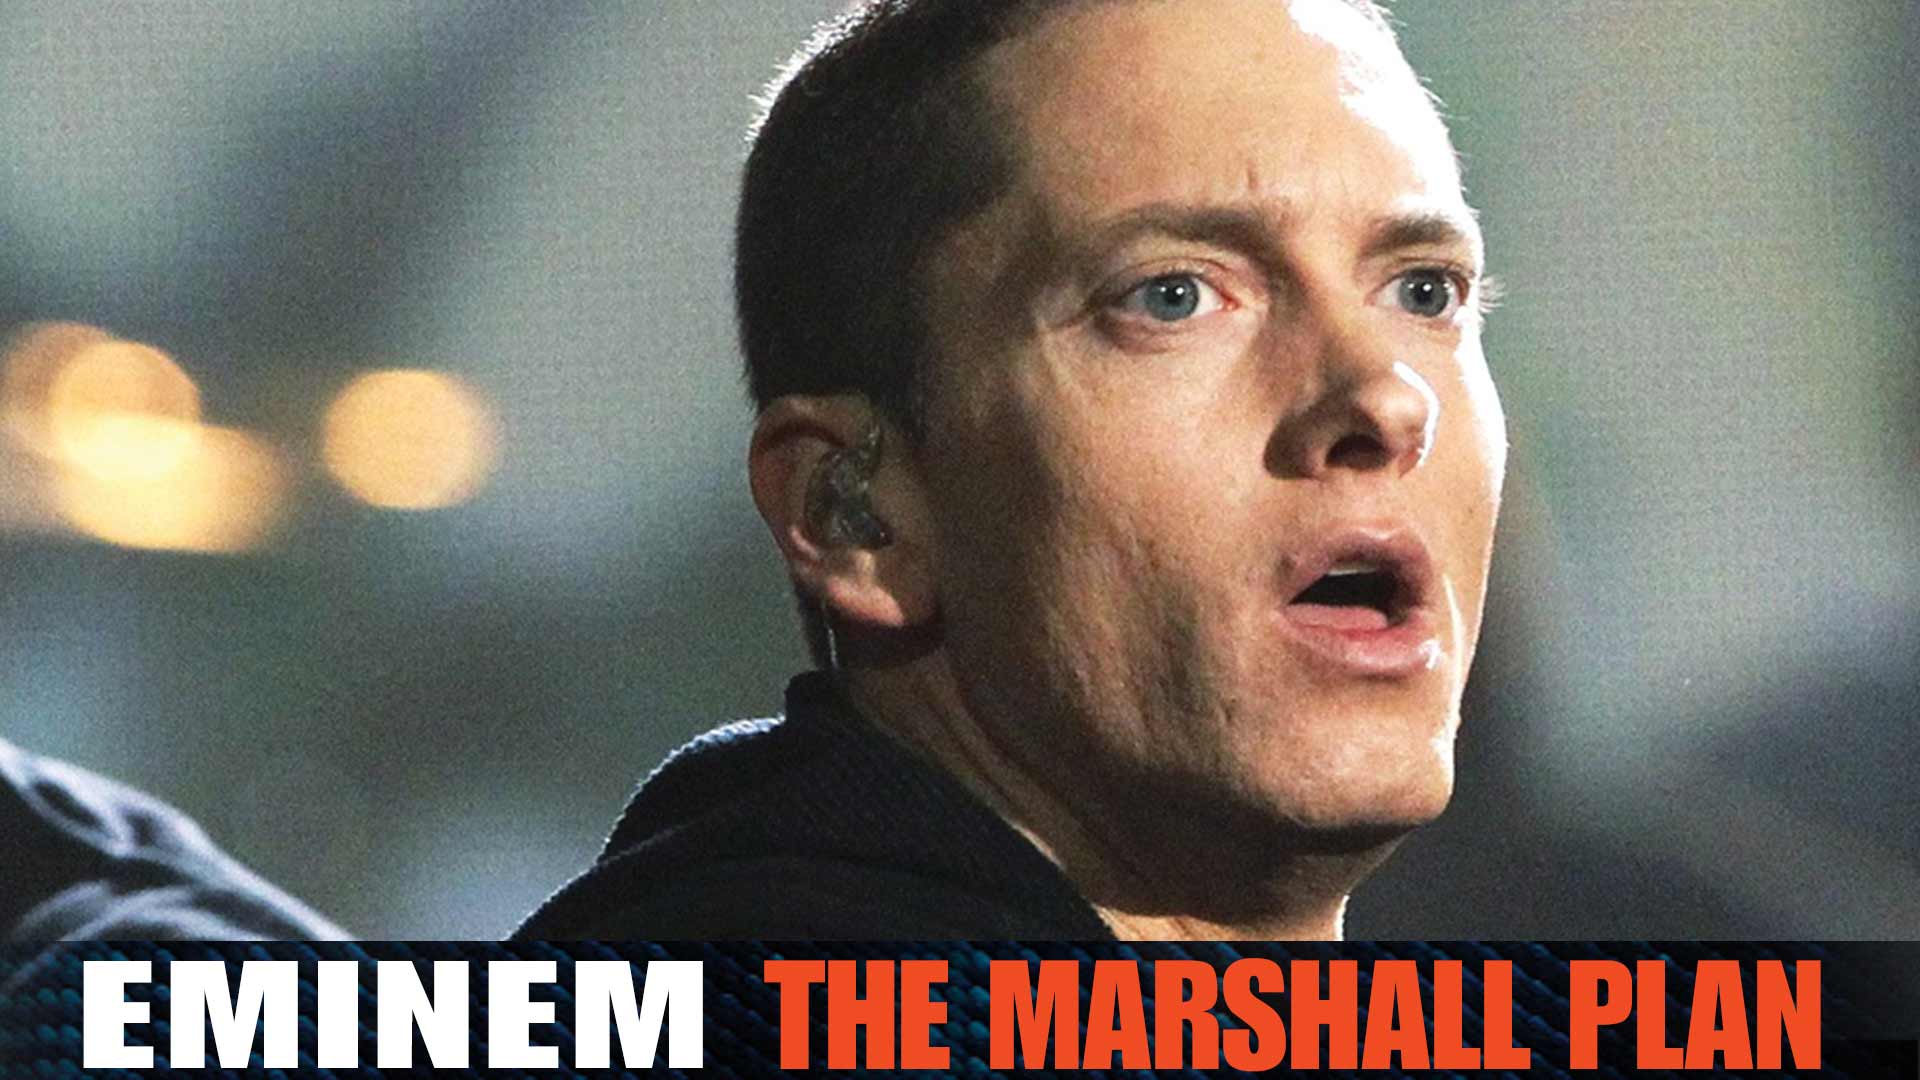 Eminem: The Marshall Plan